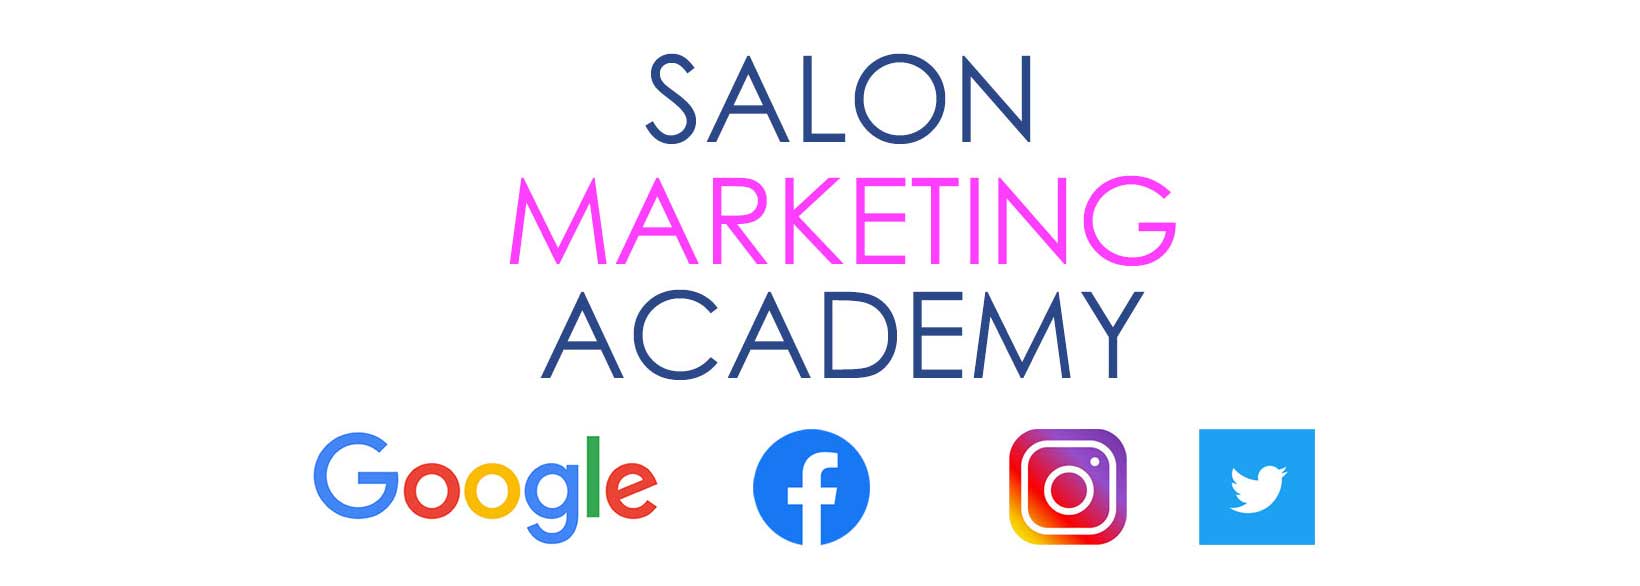 free salon marketing help and tips